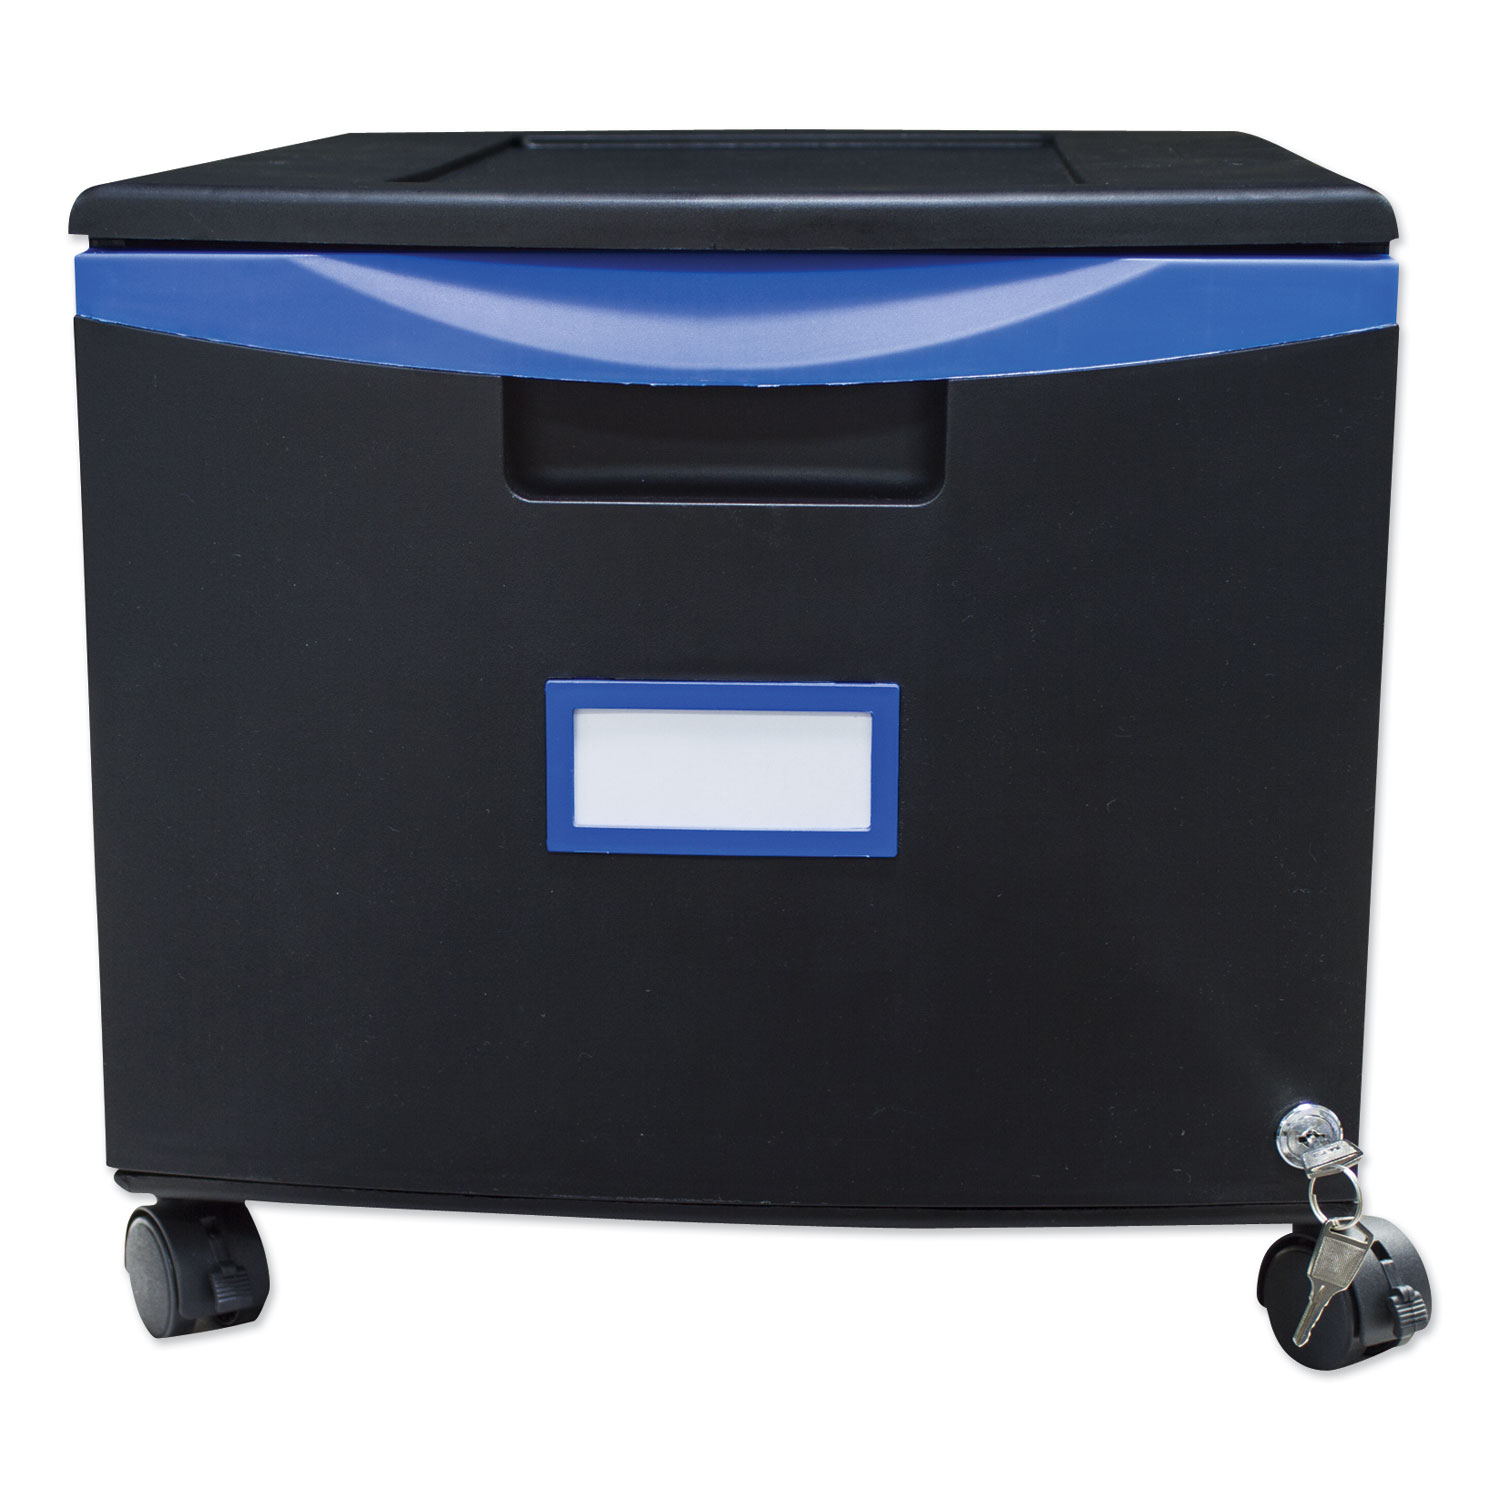  Storex 61269U01C Single-Drawer Mobile Filing Cabinet, 14.75w x 18.25d x 12.75h, Black/Blue (STX61269U01C) 